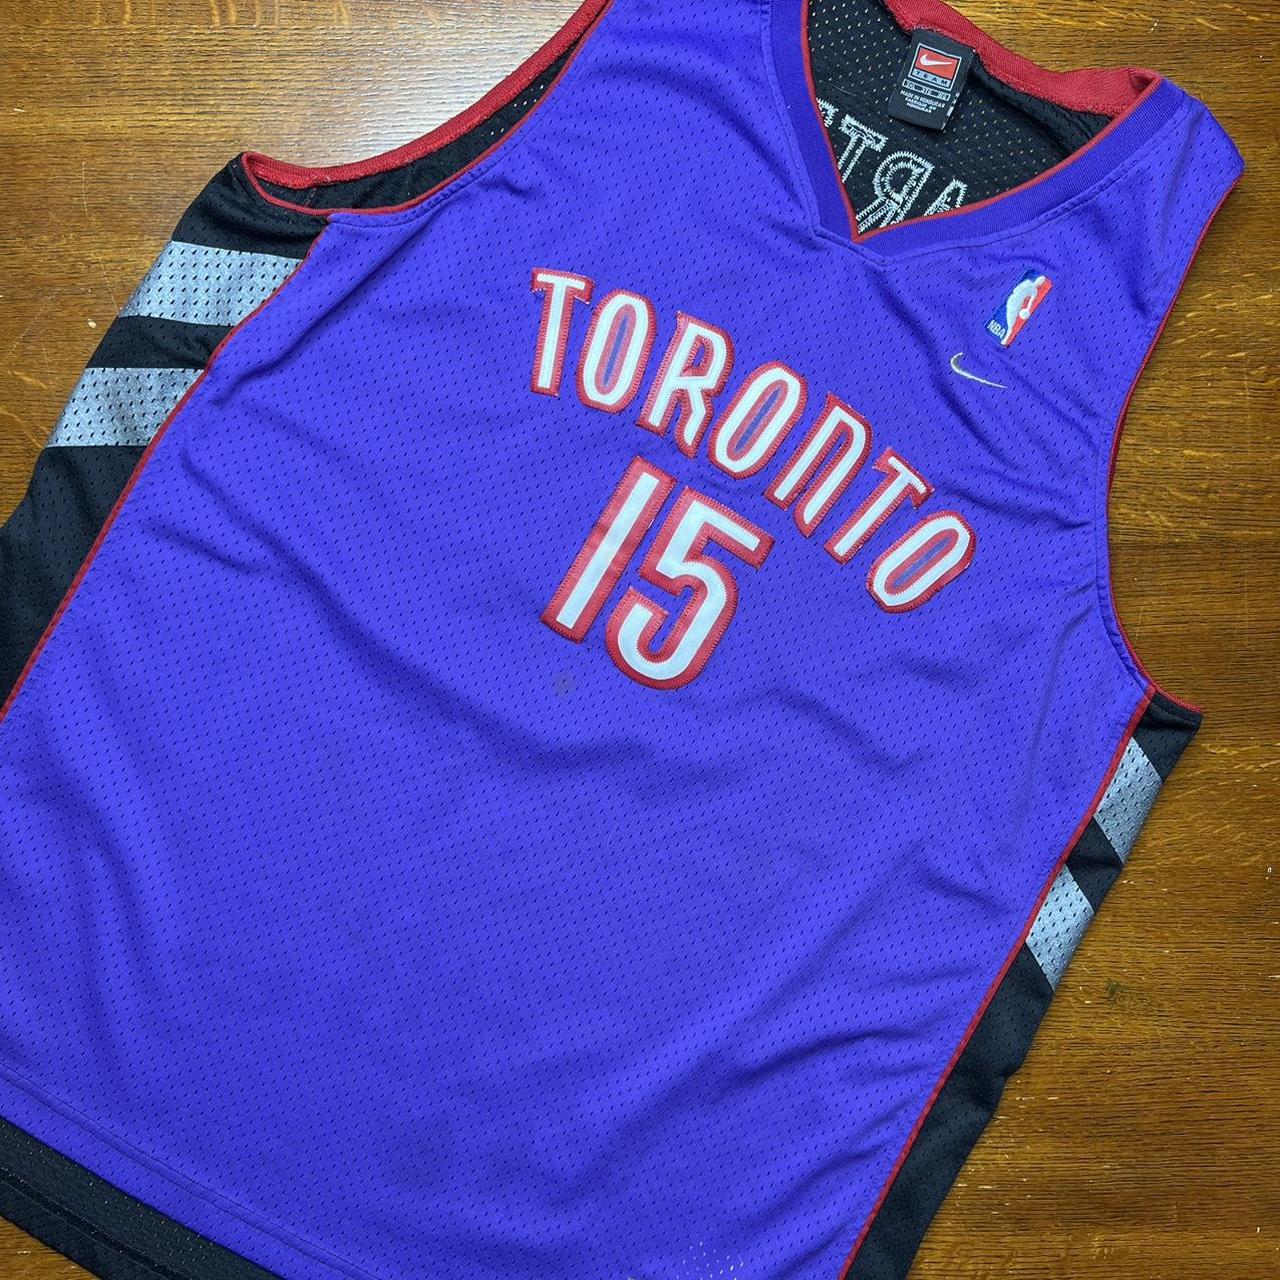 Vintage 90's Nike Vince Carter Toronto Raptors Purple 